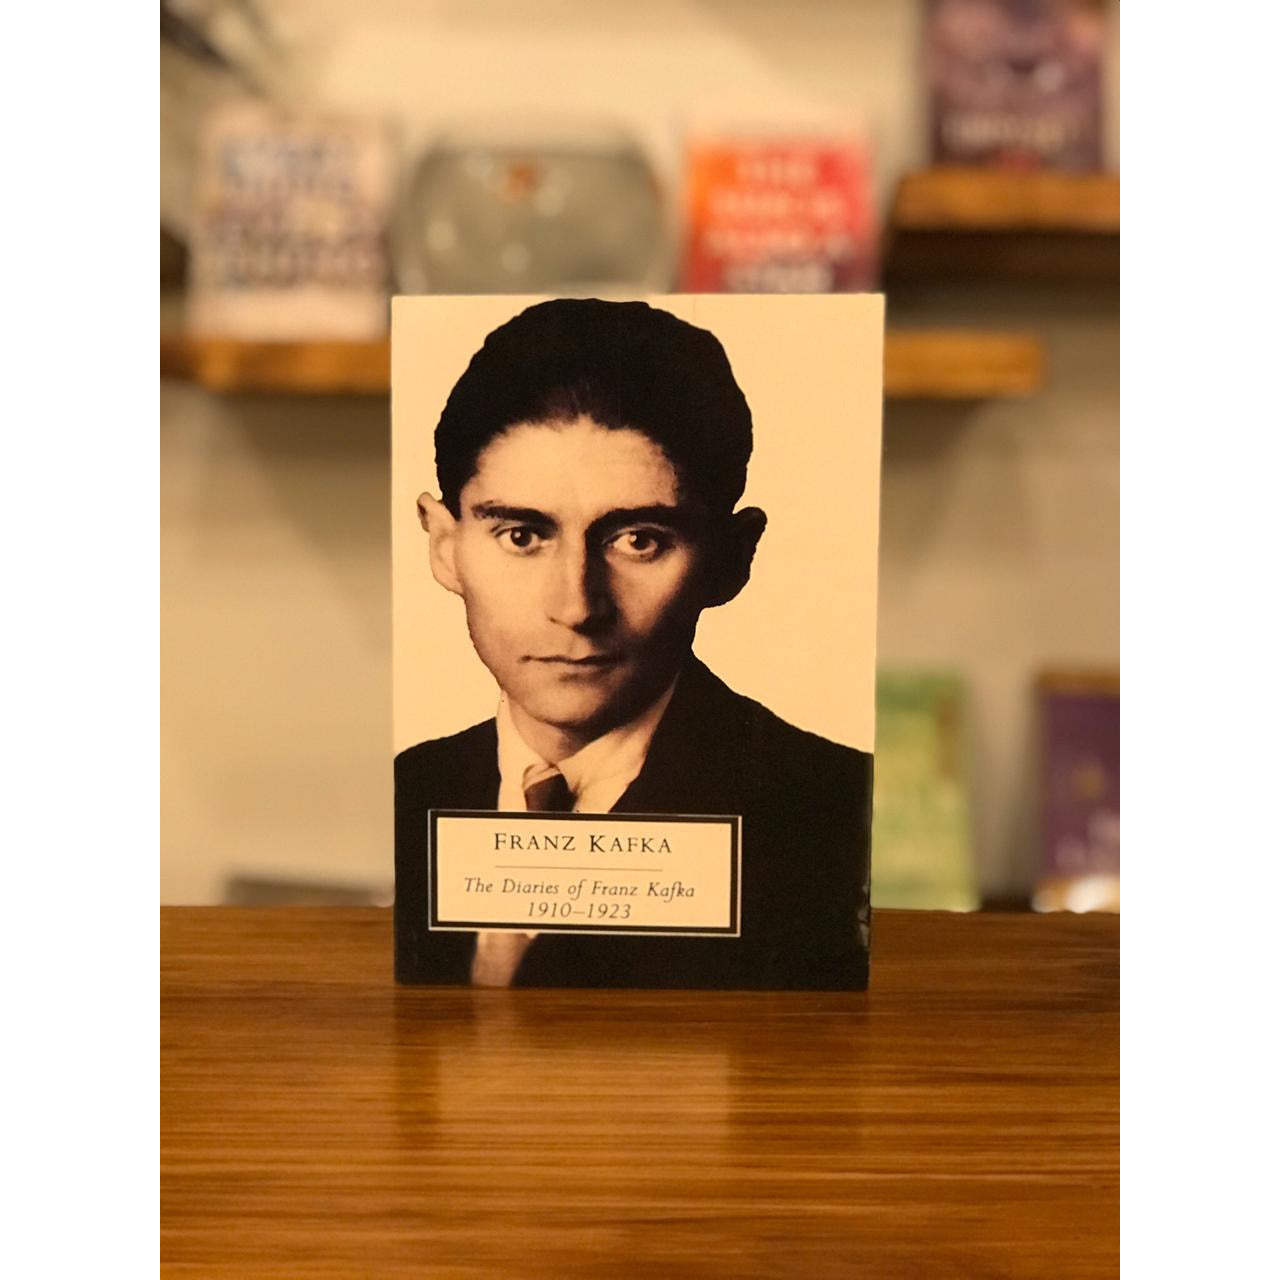 The Diaries of Franz Kafka 1910-1923 By Franz kafka